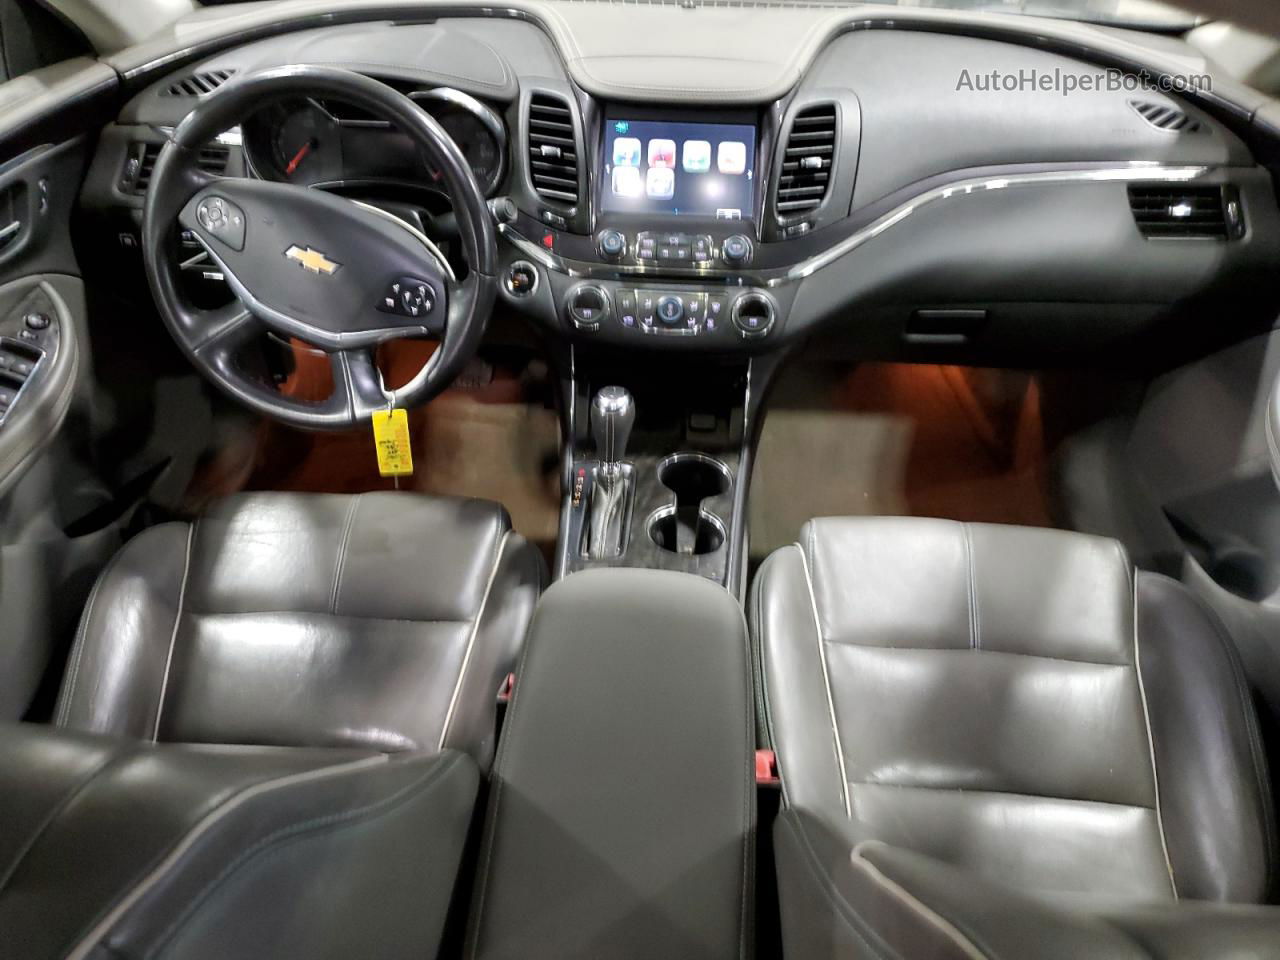 2014 Chevrolet Impala Ltz Tan vin: 2G1155S32E9116512